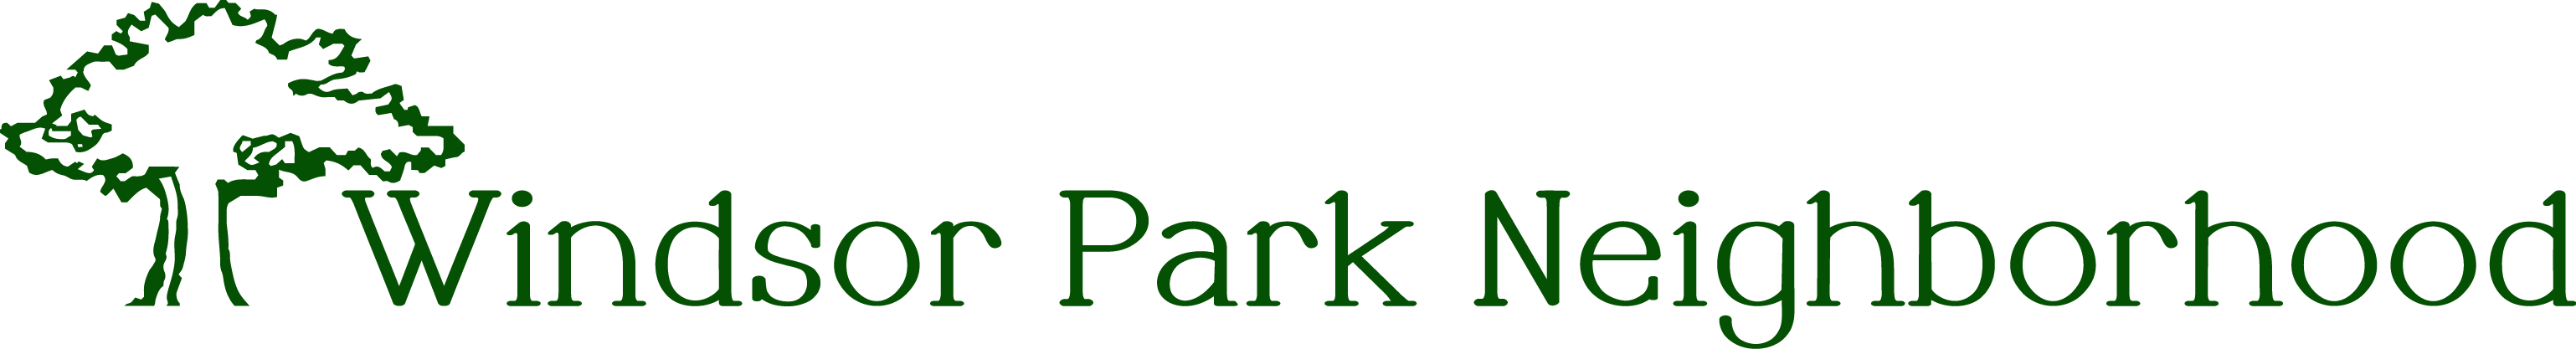 Windsor Park Neighborhood Association